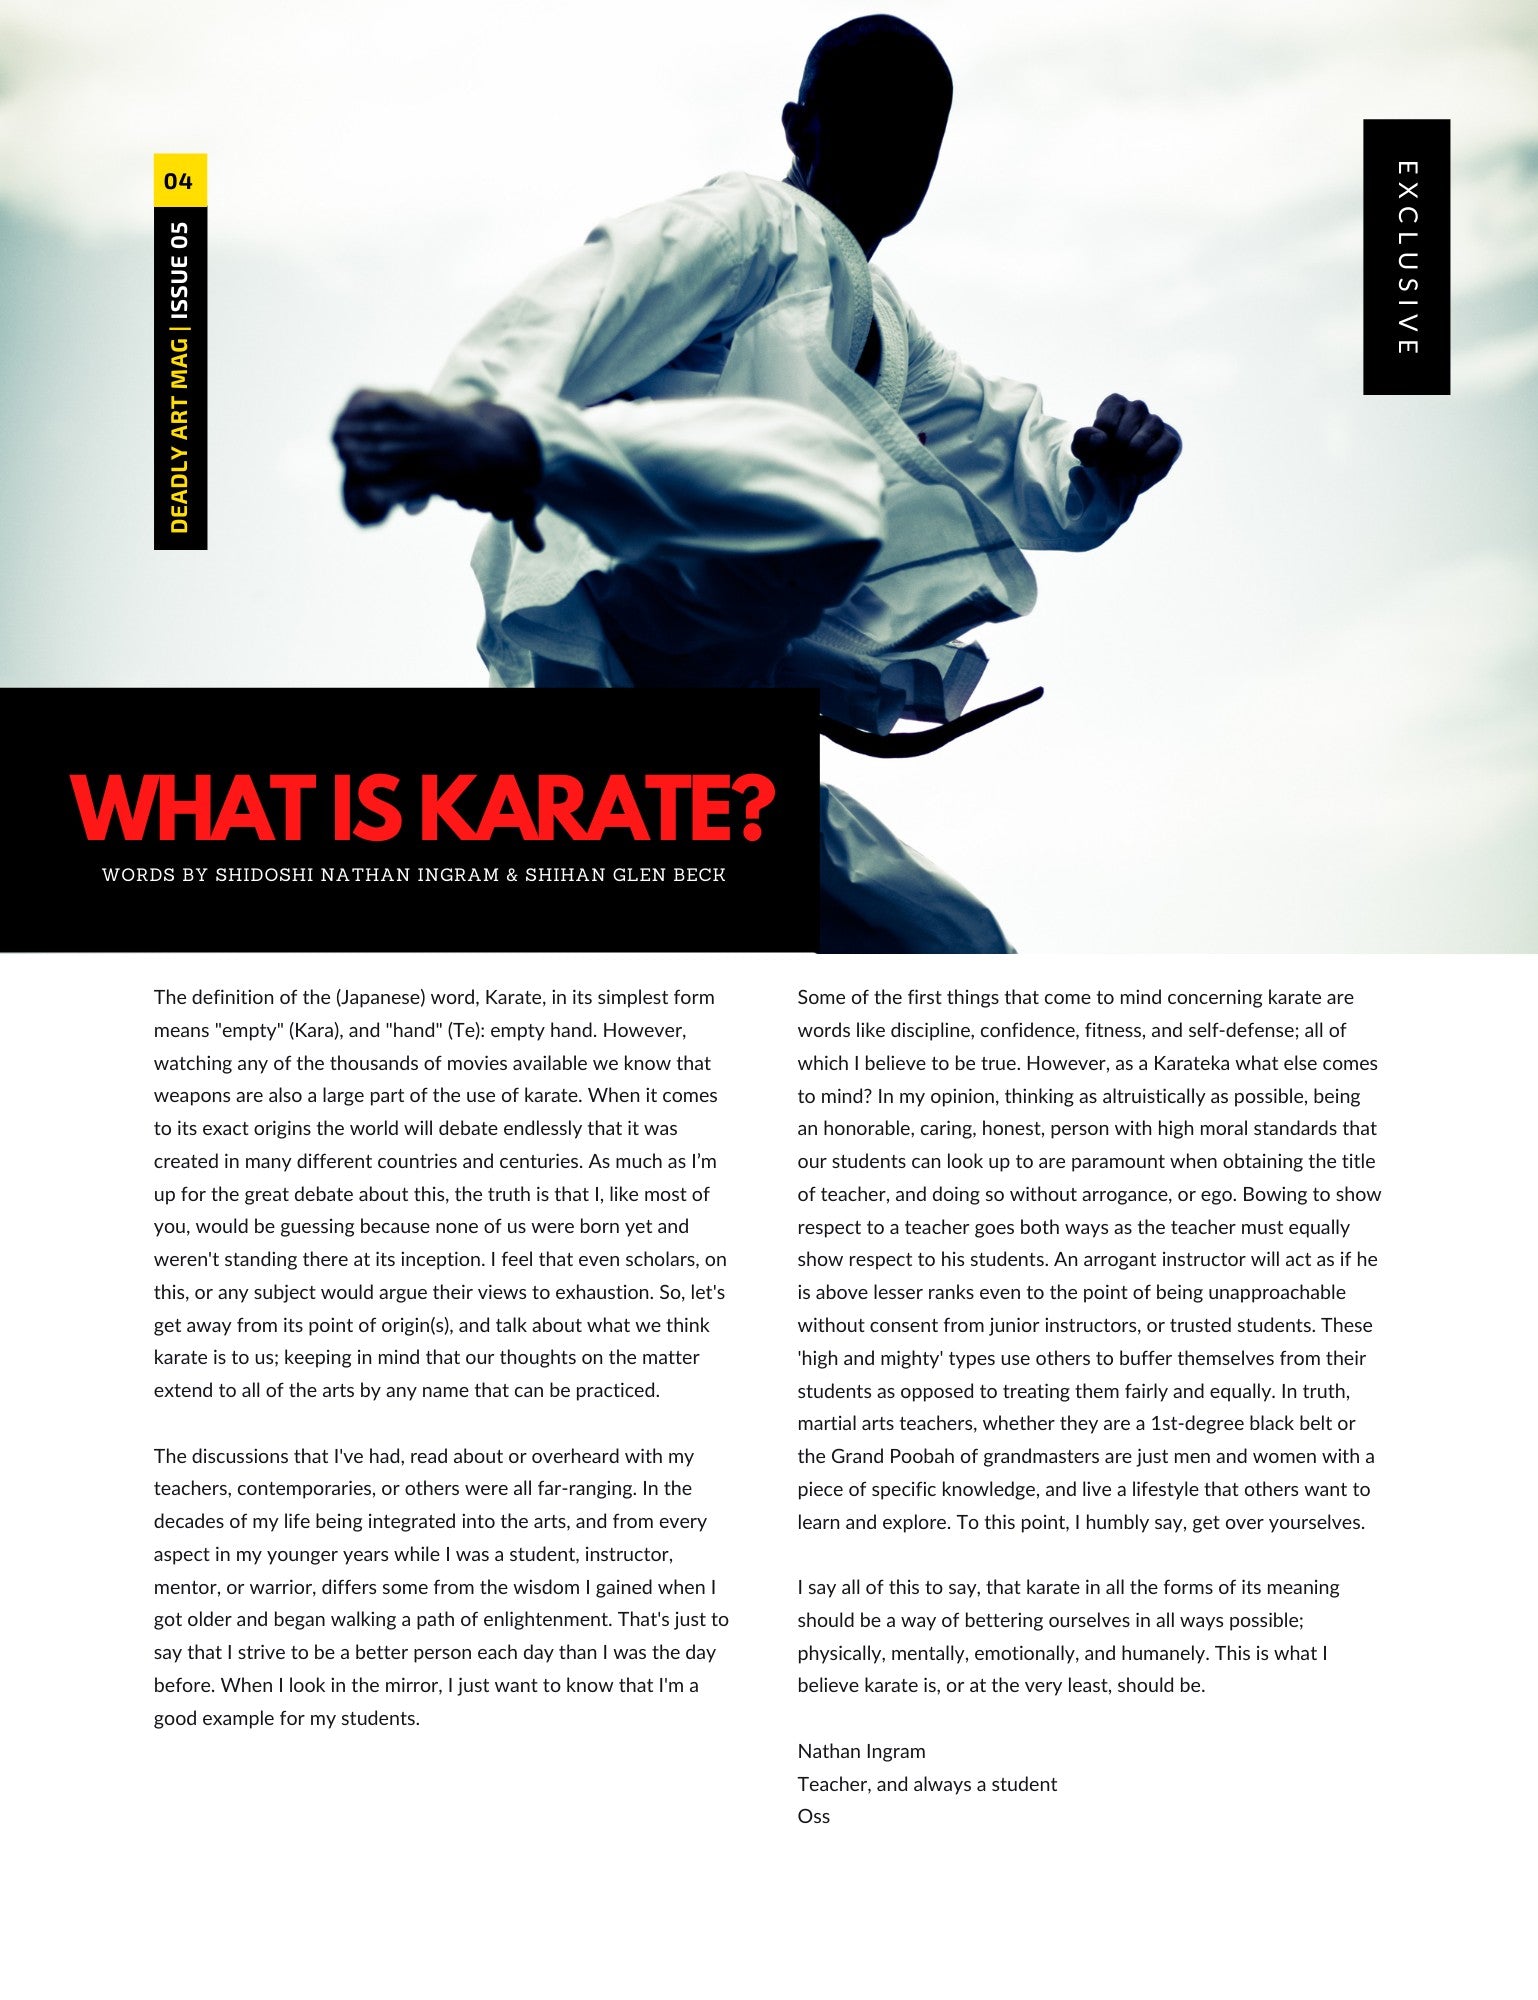 Deadly Art of Survival Magazine 5th Edition #1 Martial Arts Magazine Worldwide deadlyartofsurvival.com